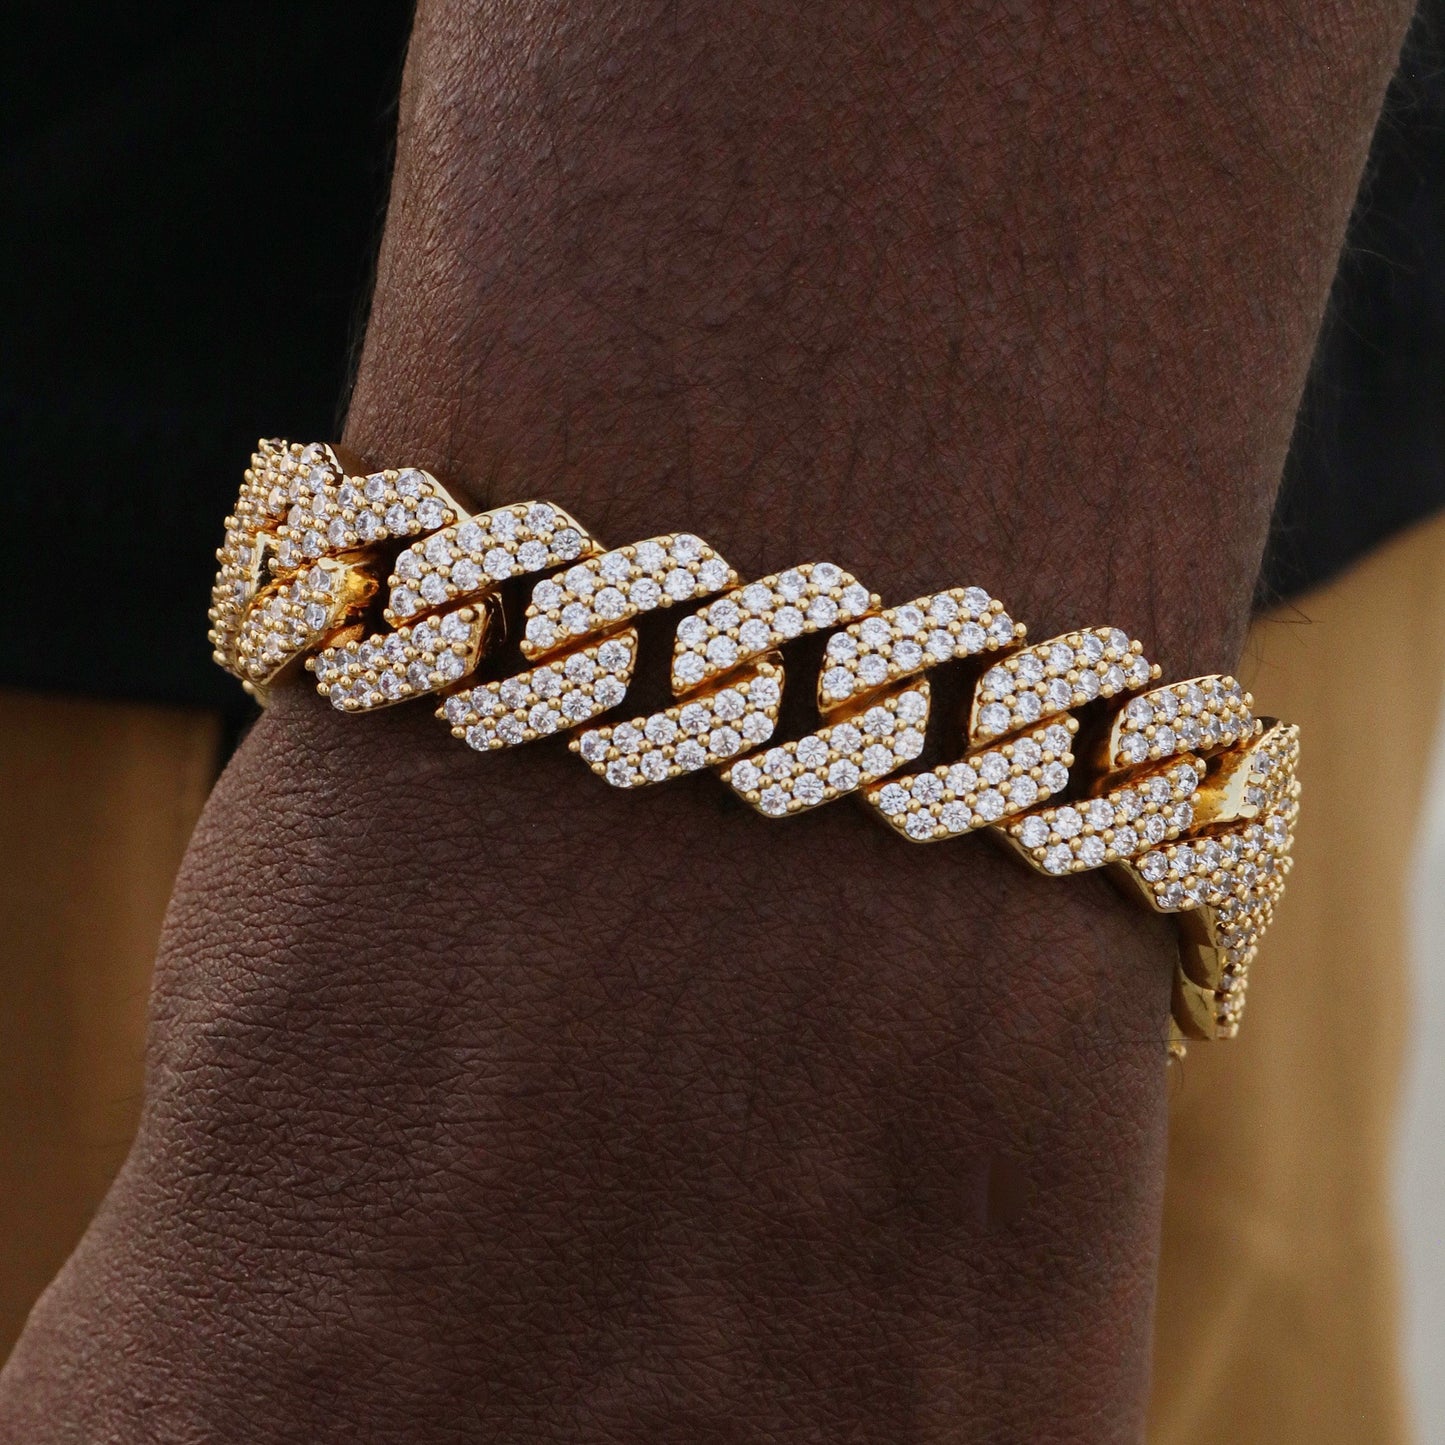 13mm Moissanite Prong Link bracelet - Gold over 925 Silver